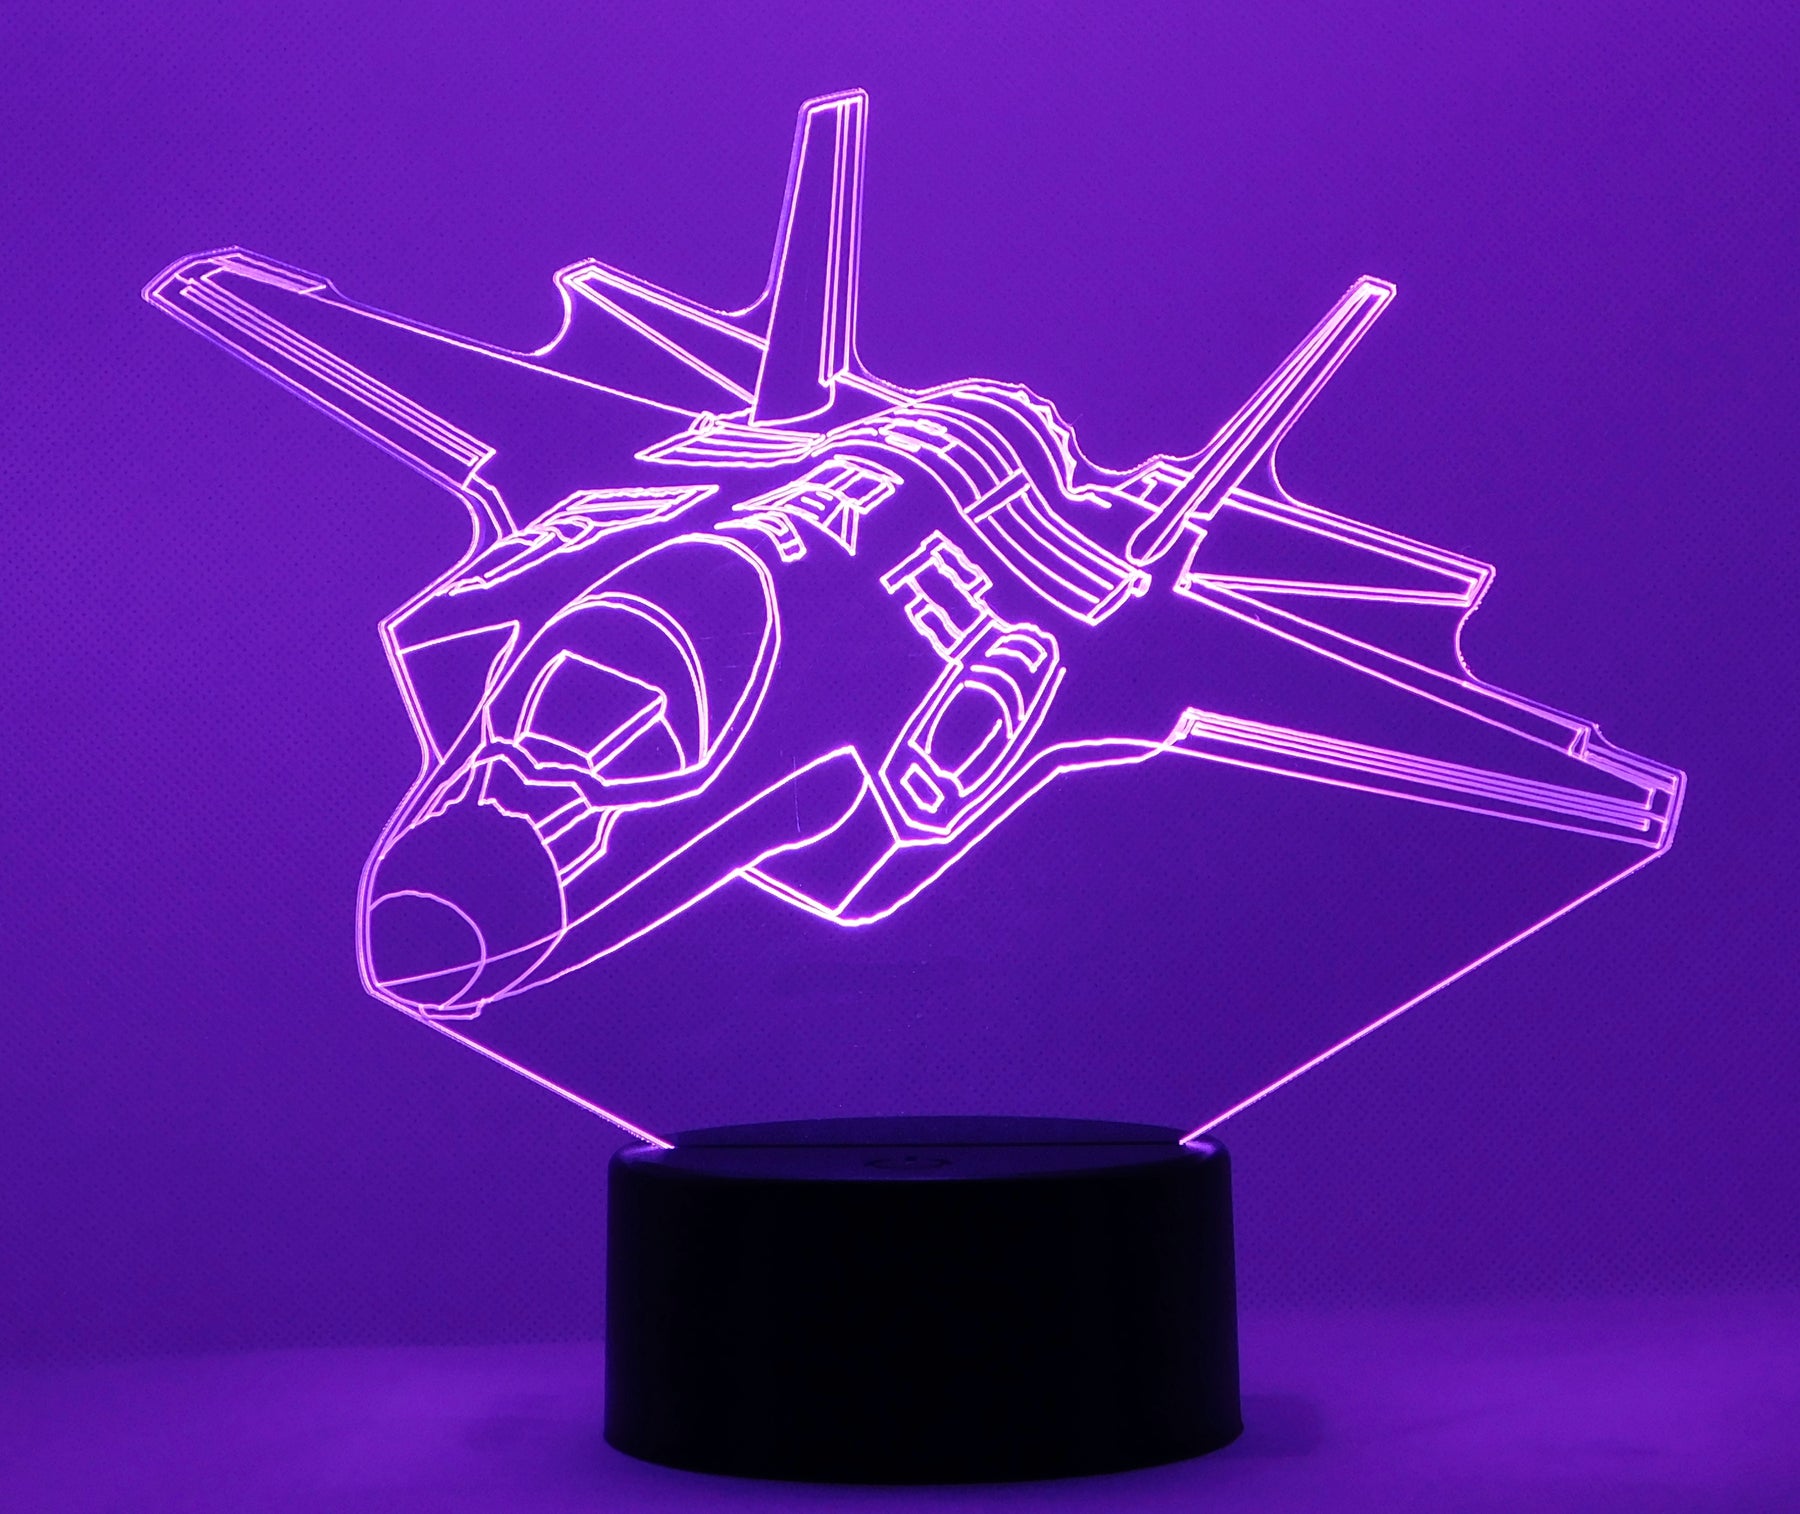 F-35 Lighting II Fighter Jet 3-D Optical Illusion Multicolored LED Lamp